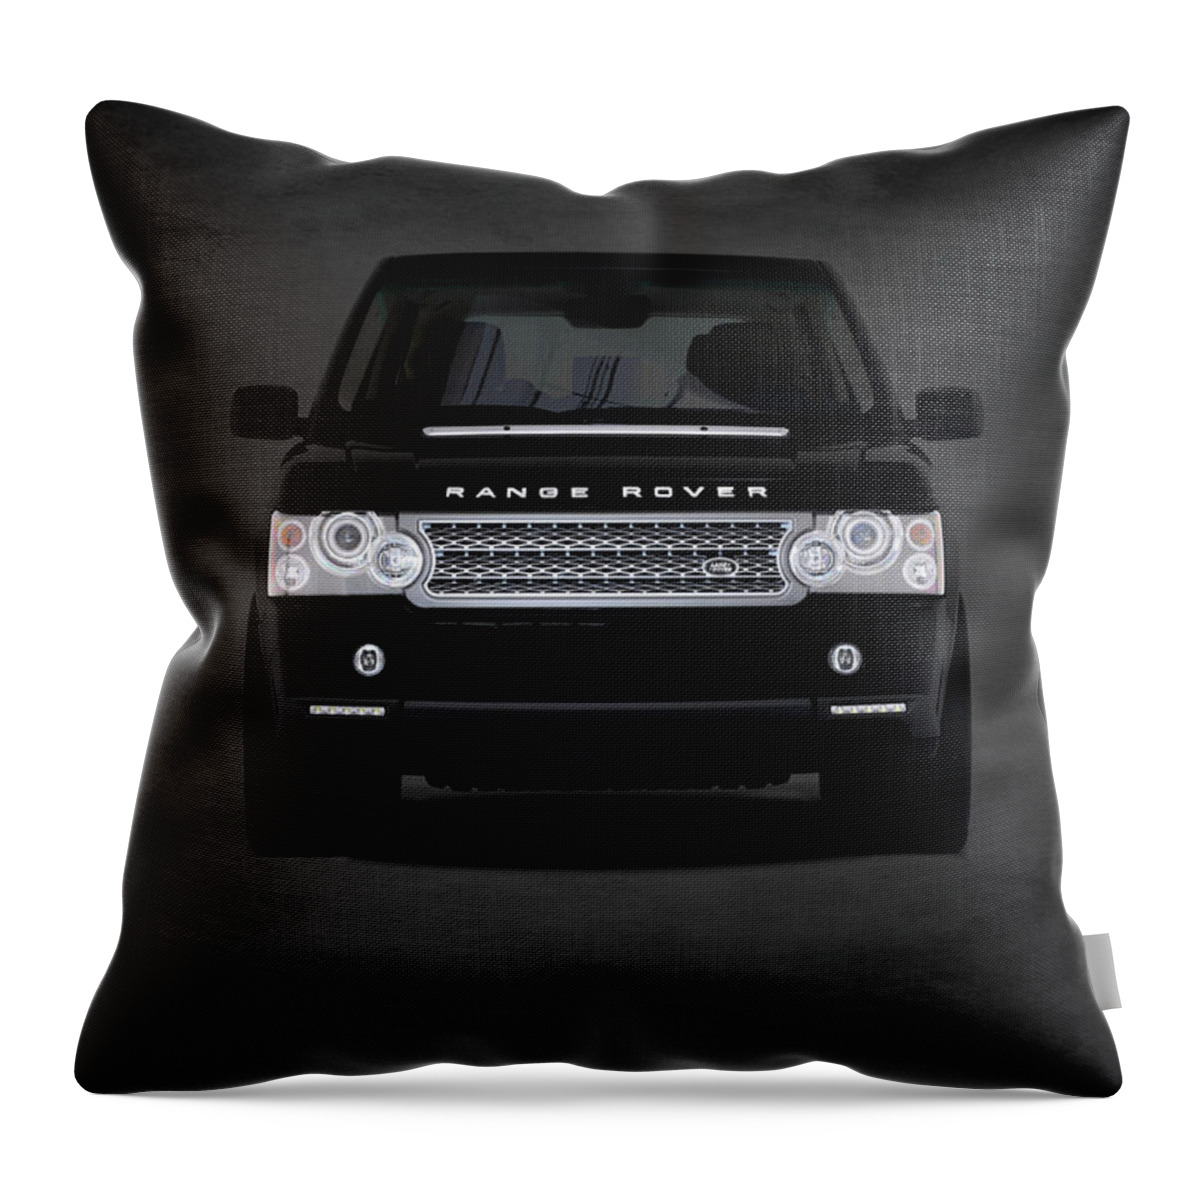 Range Rover Throw Pillow featuring the photograph Range Rover by Mark Rogan